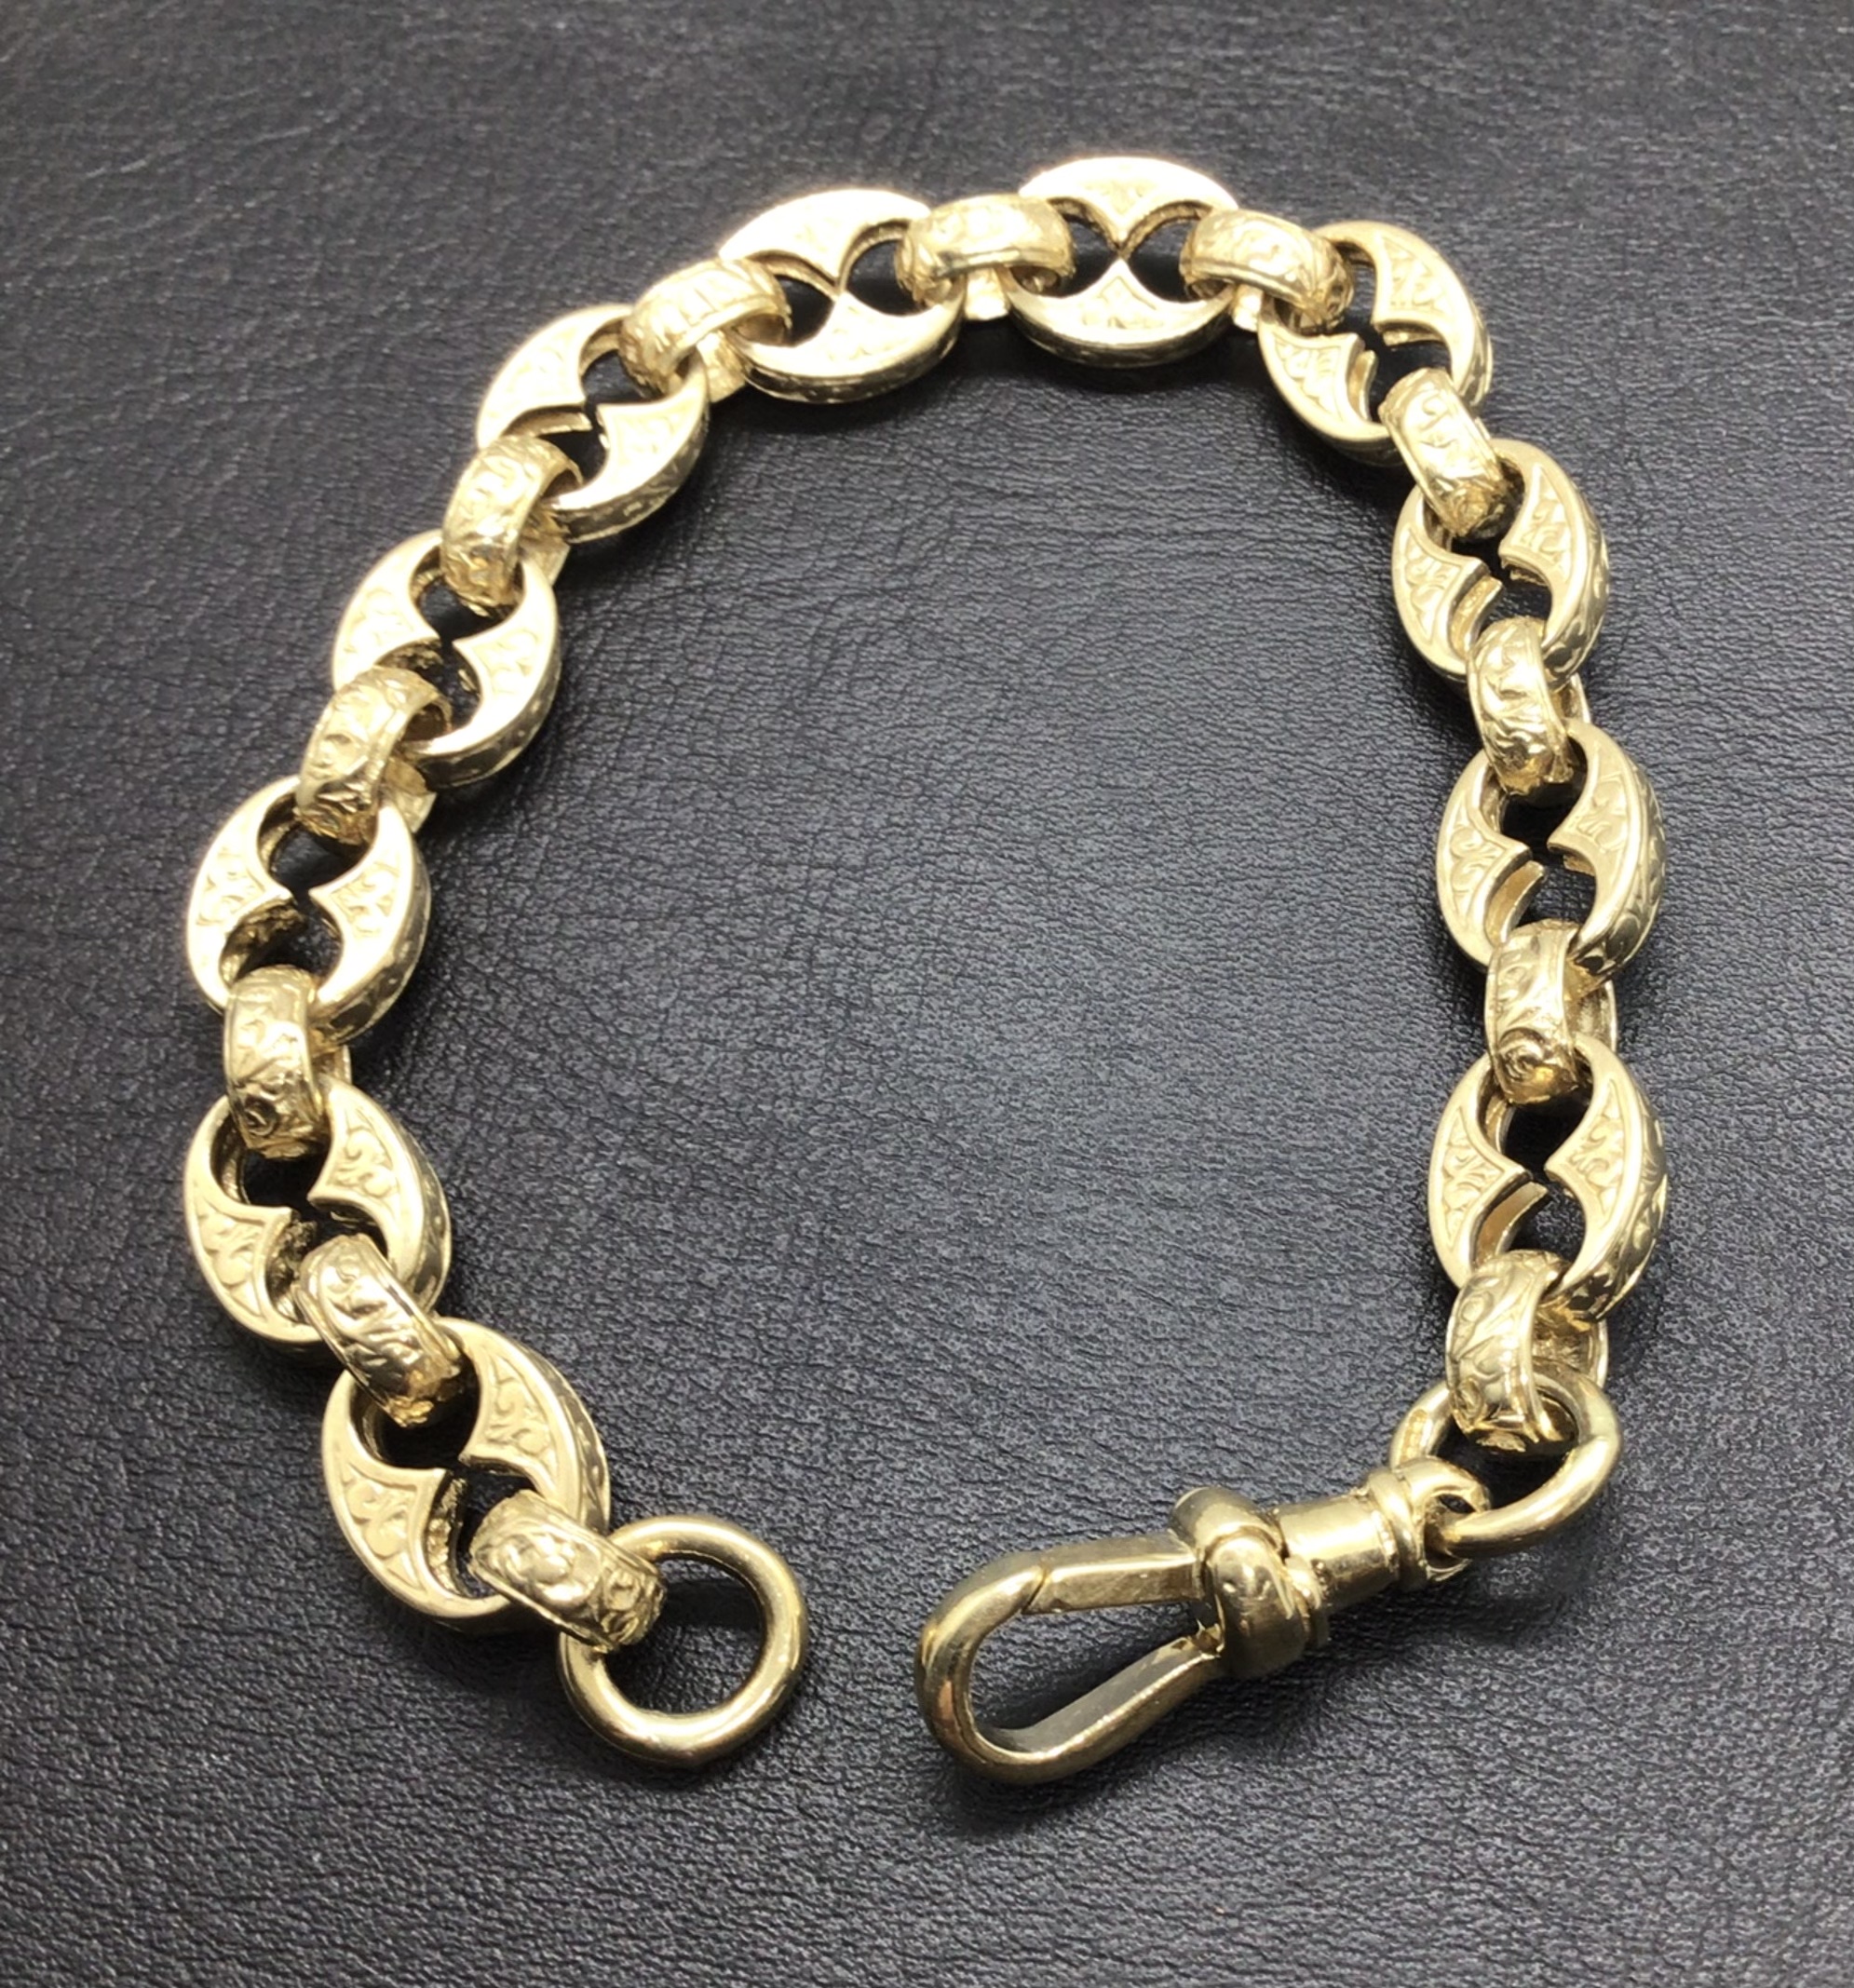 Anitque Button Bracelet - Bakelite - by On U Jewelry